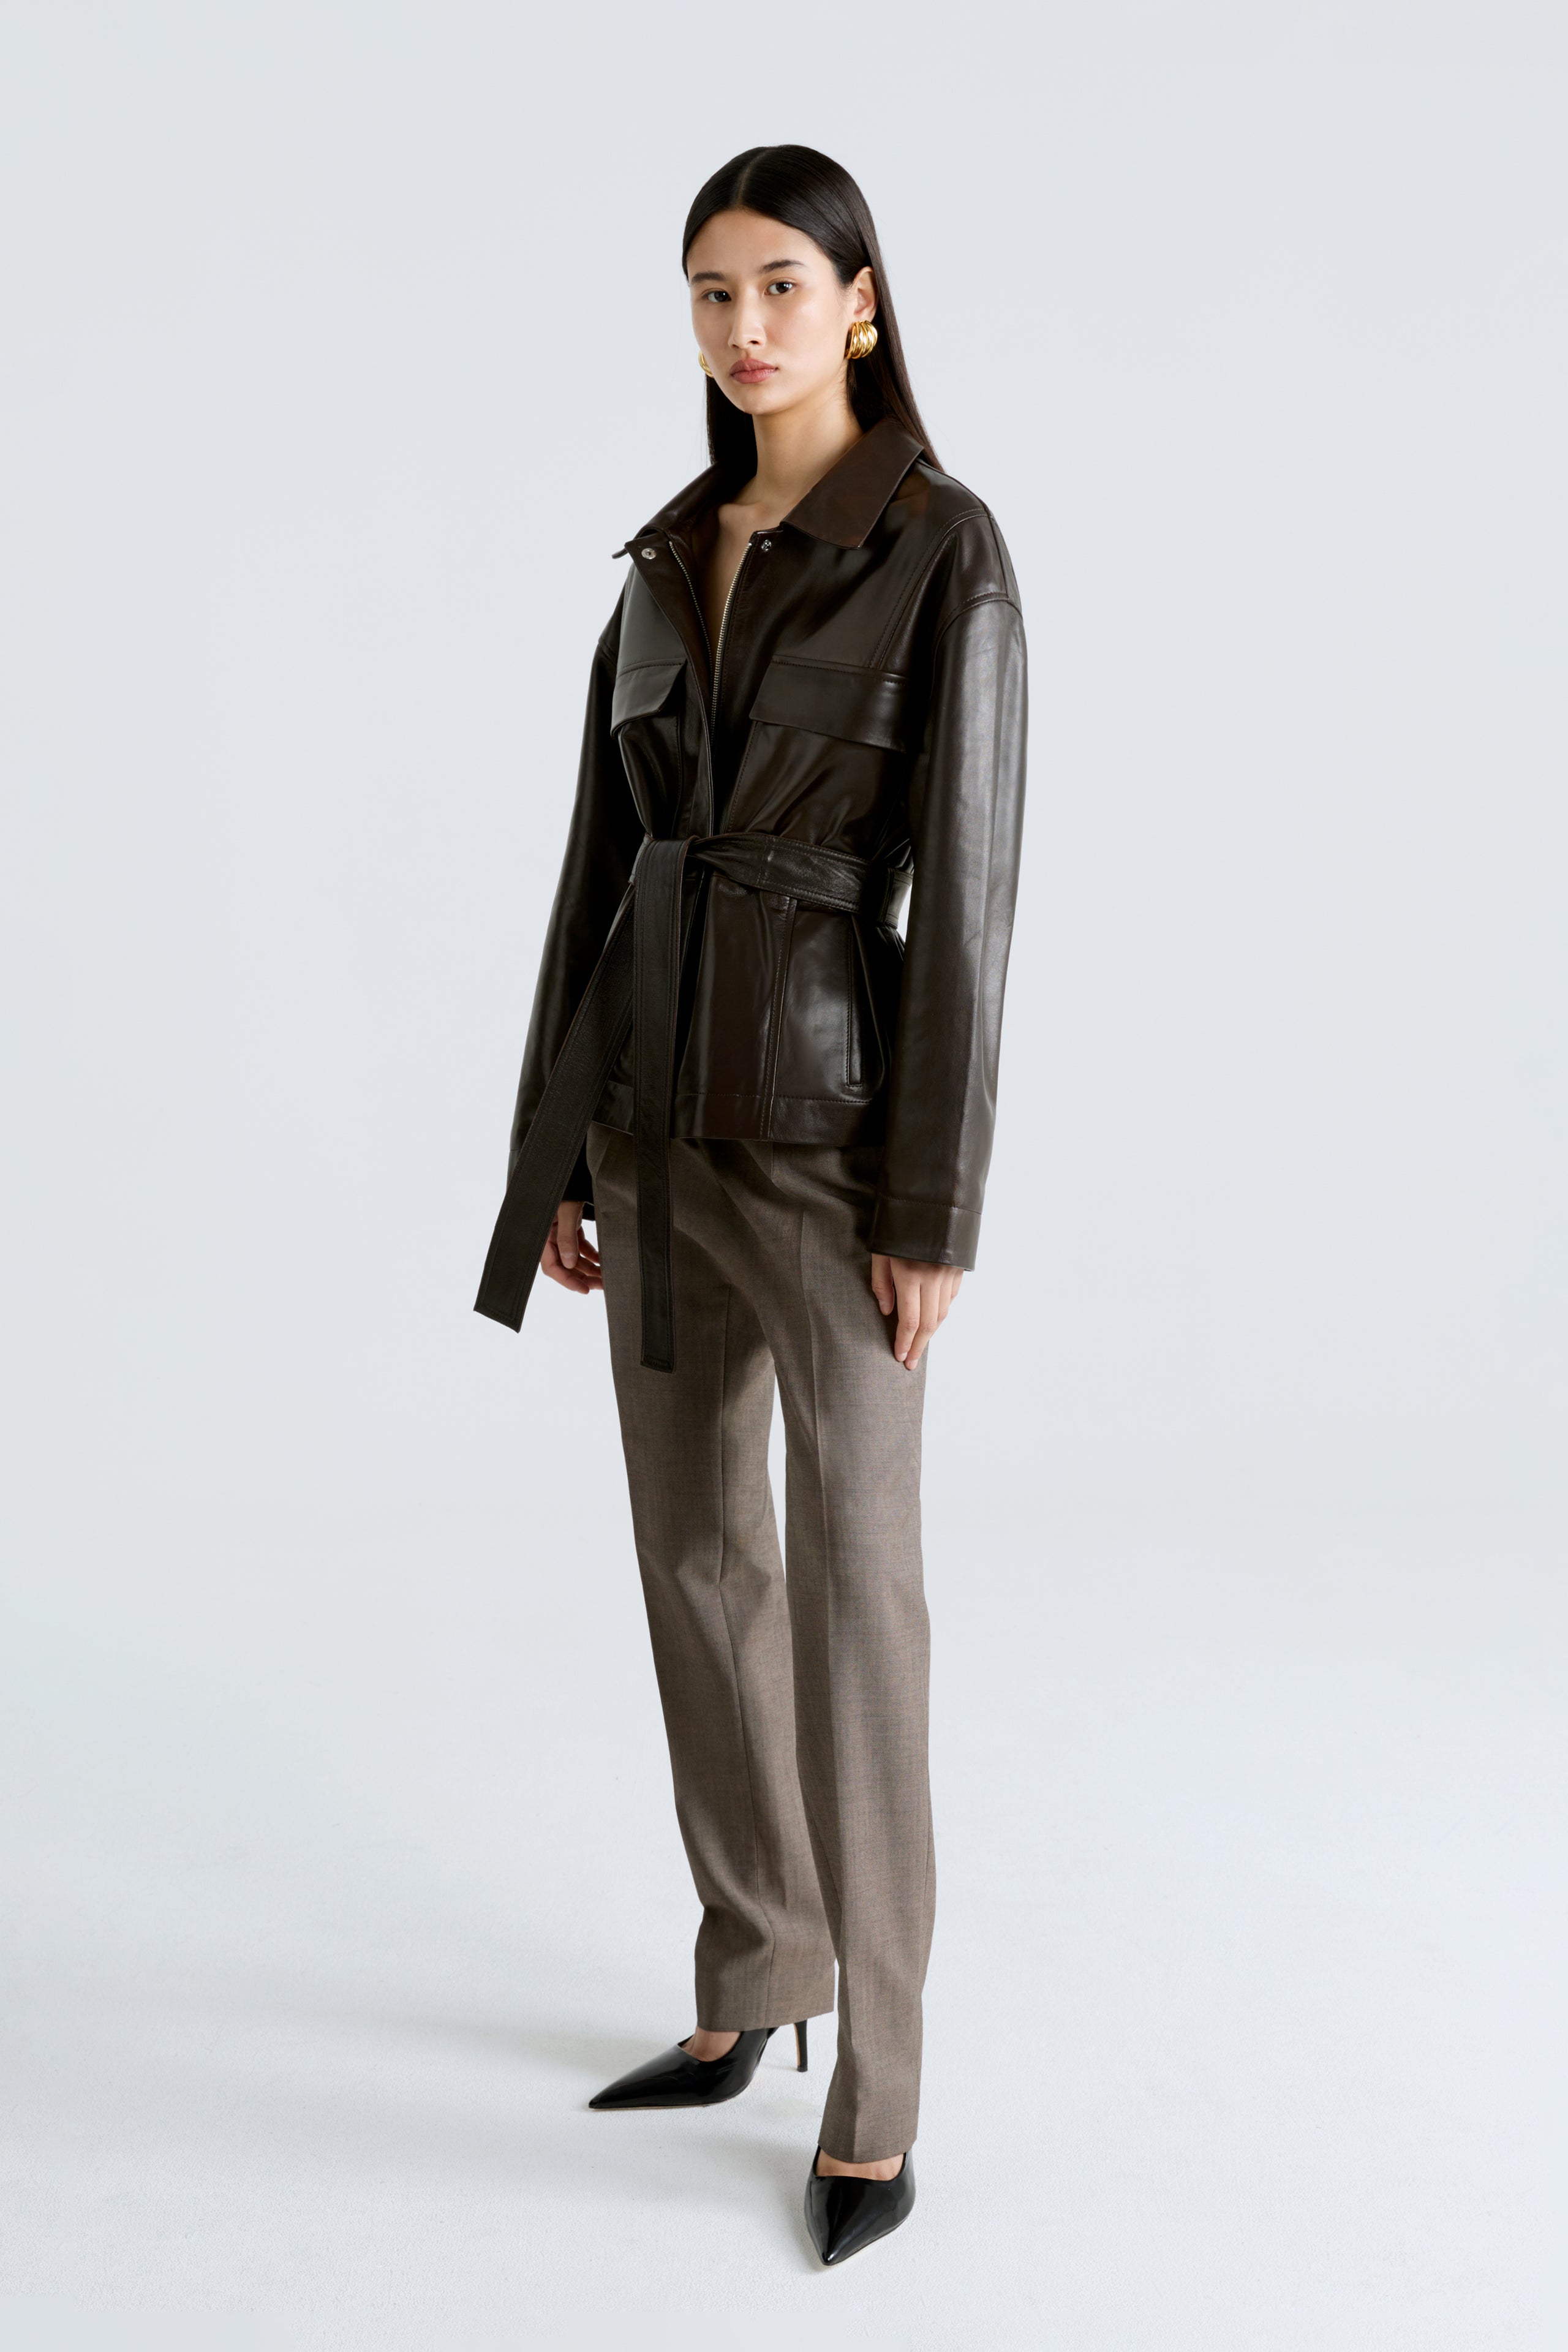 Model is wearing the Tilda Syrup Belted Leather Jacket Side